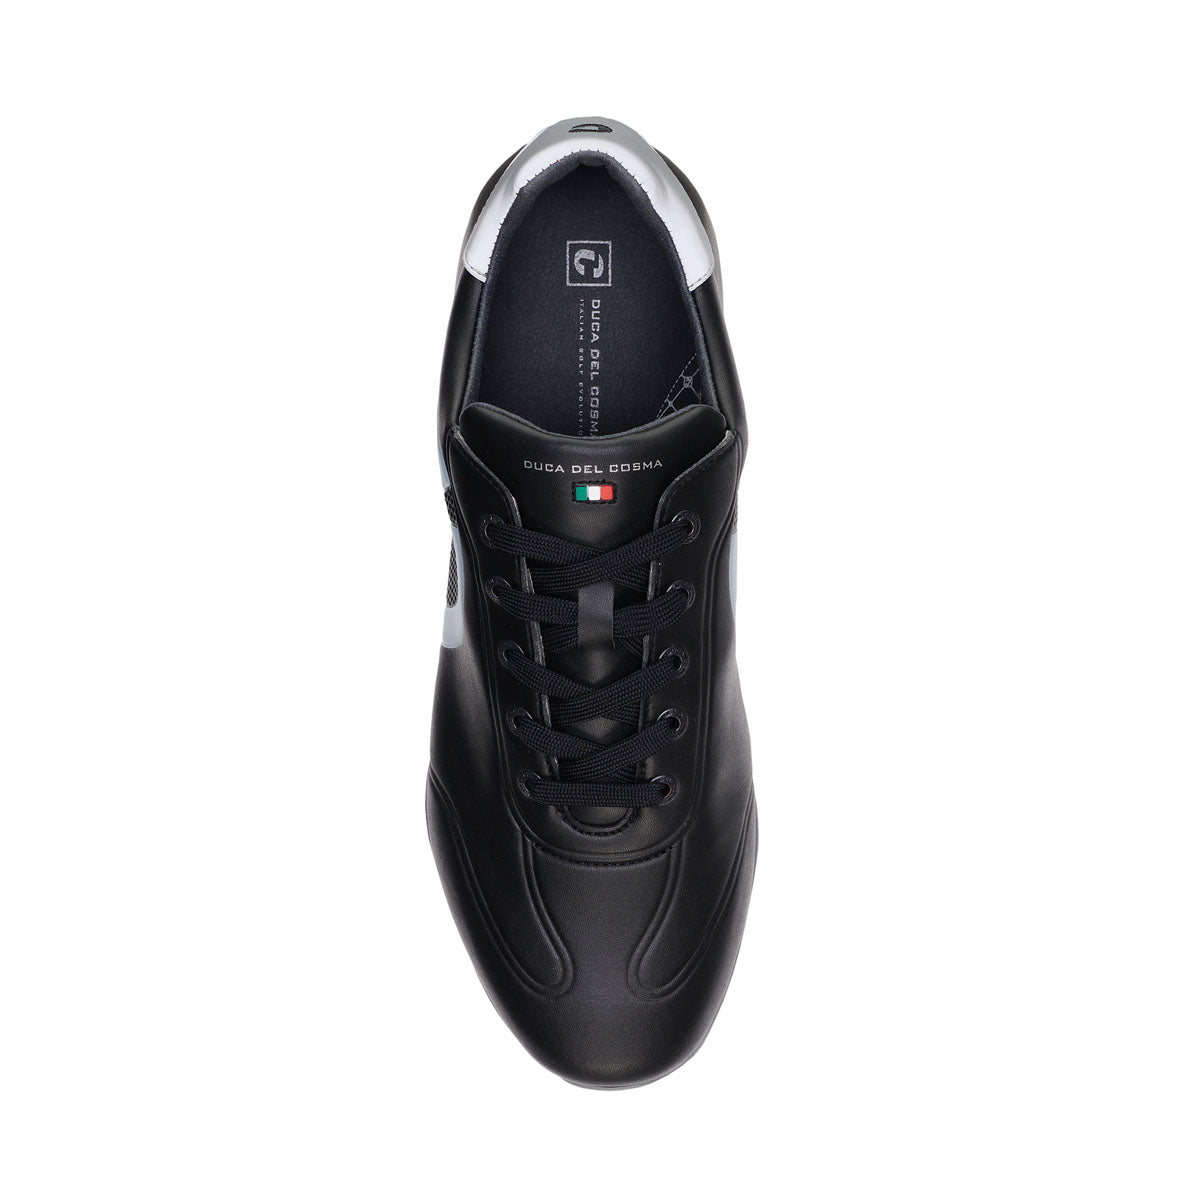 Men's Kingscup Black Golf Shoe